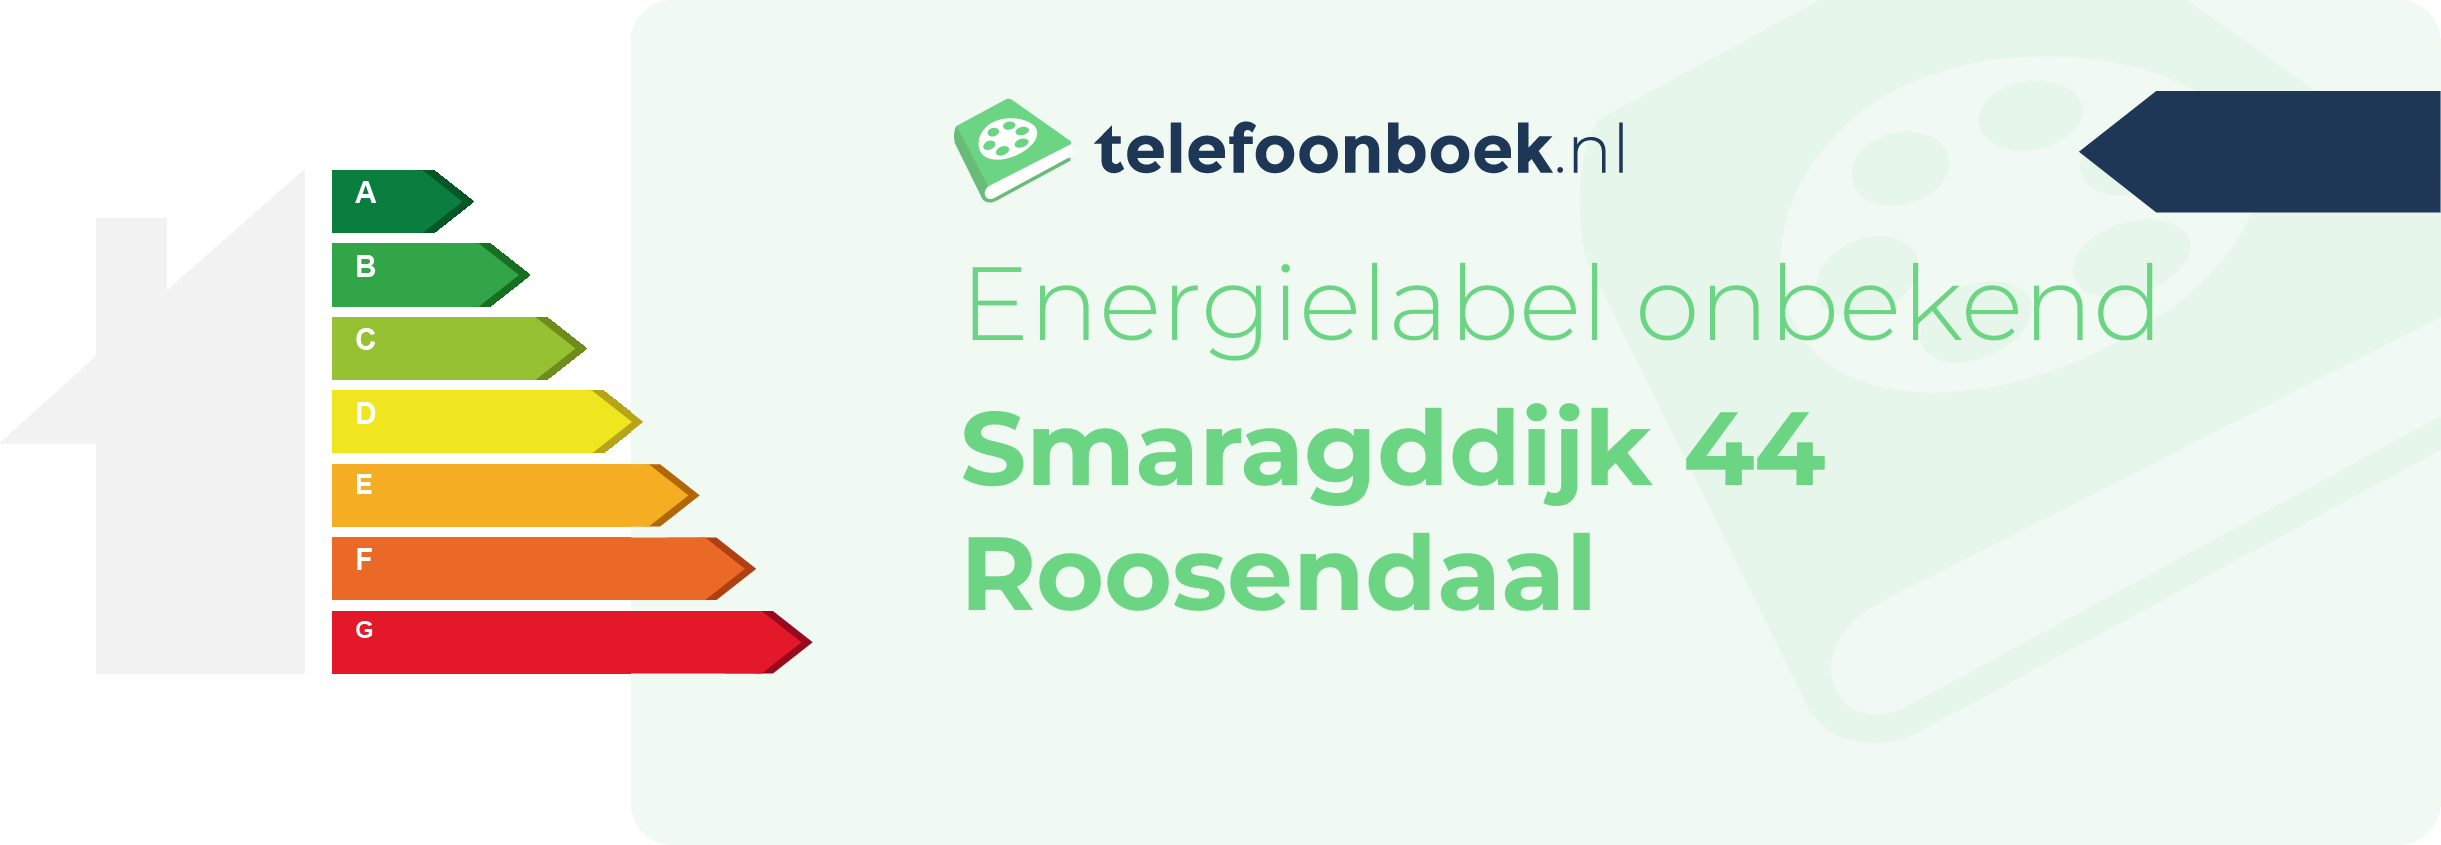 Energielabel Smaragddijk 44 Roosendaal